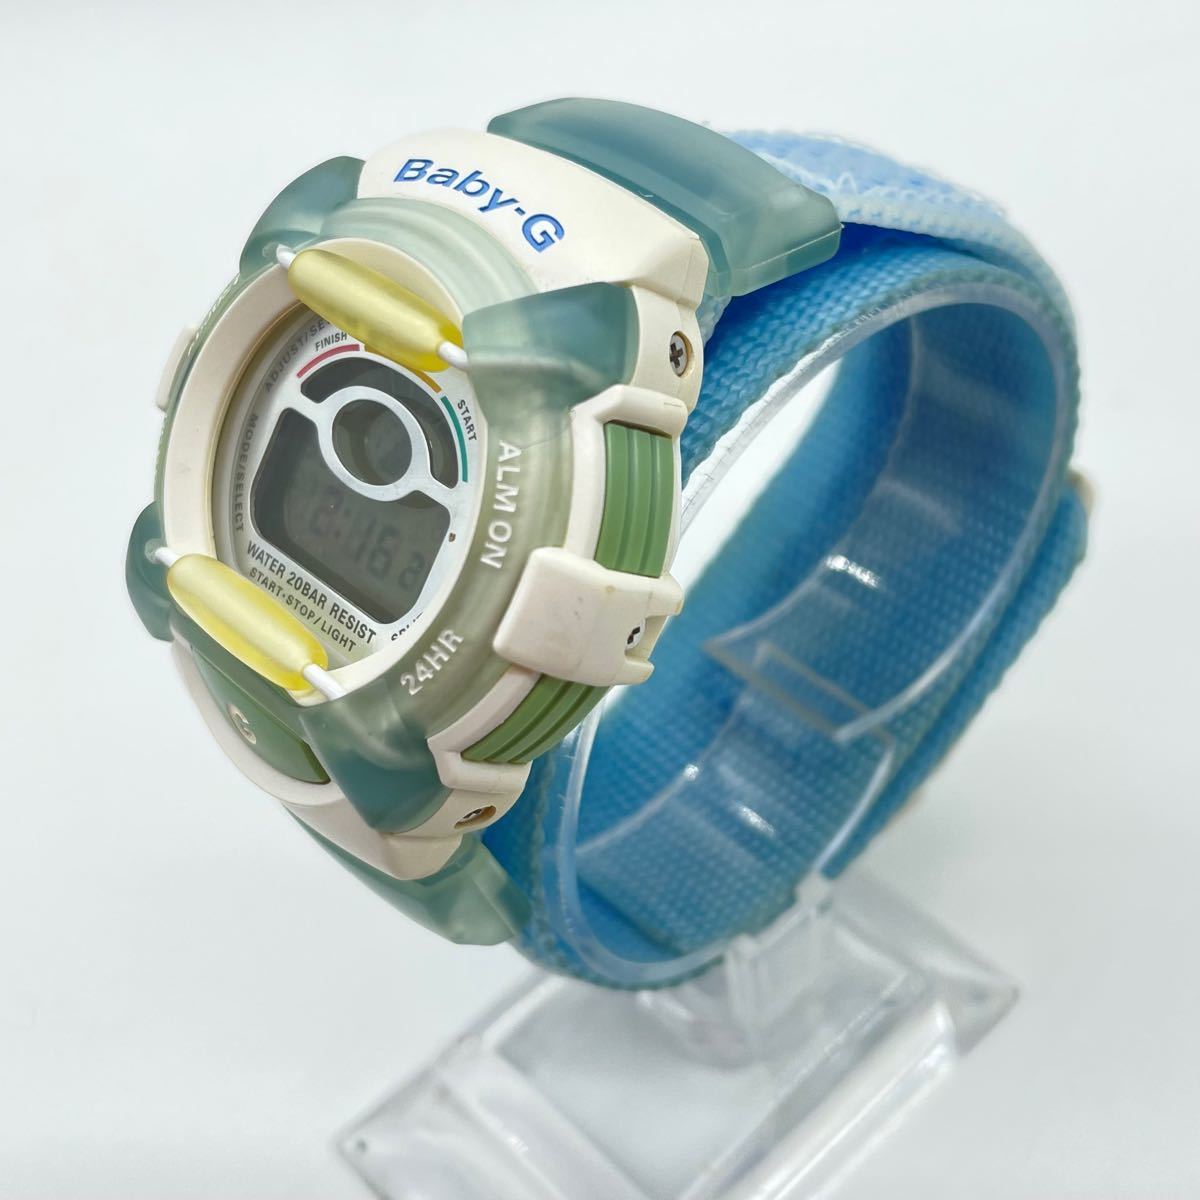 Baby-G BG-200WC デジタル 腕時計 - 腕時計(デジタル)